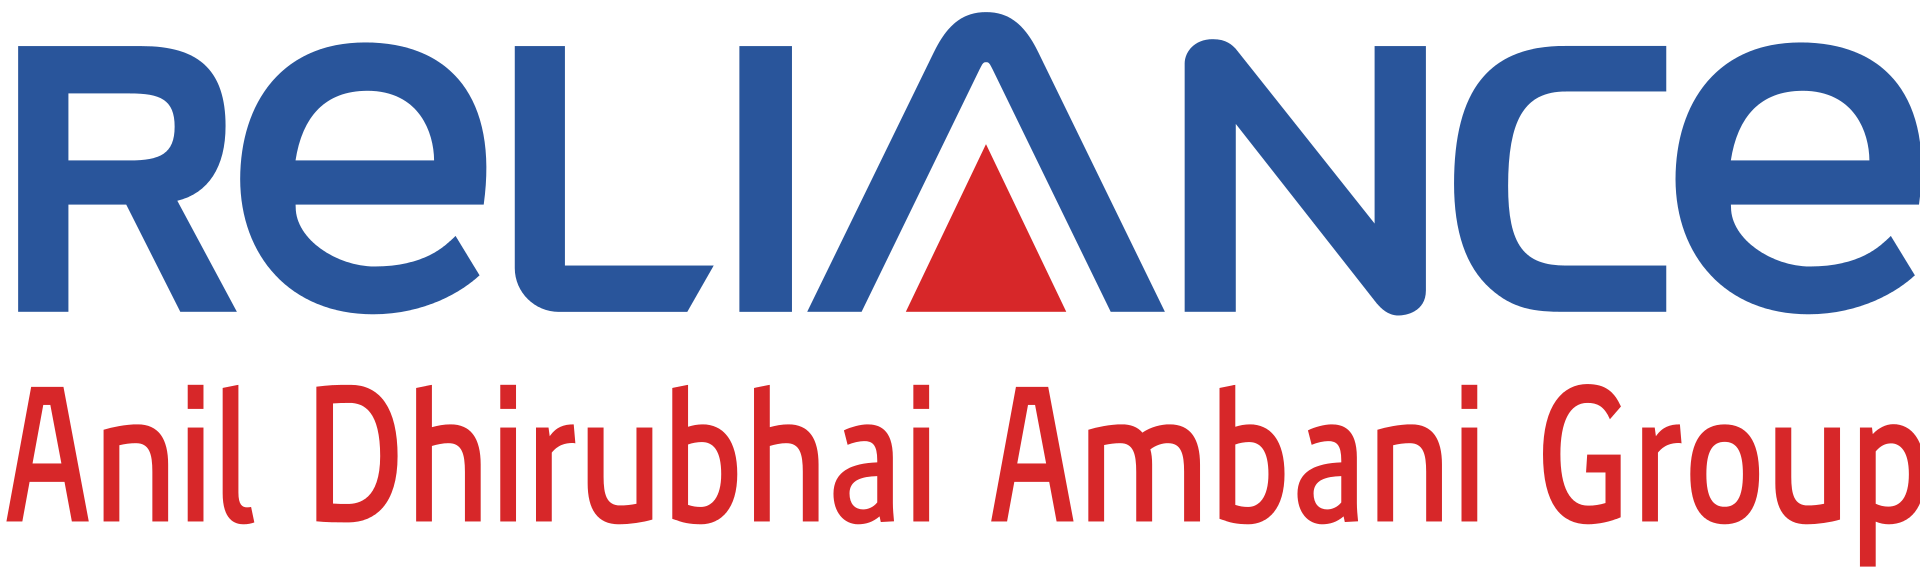 Reliance Group - Reliance ADA Group - Reliance Anil Dhirubhai Ambani Group - Reliance Electric - Reliance Energy